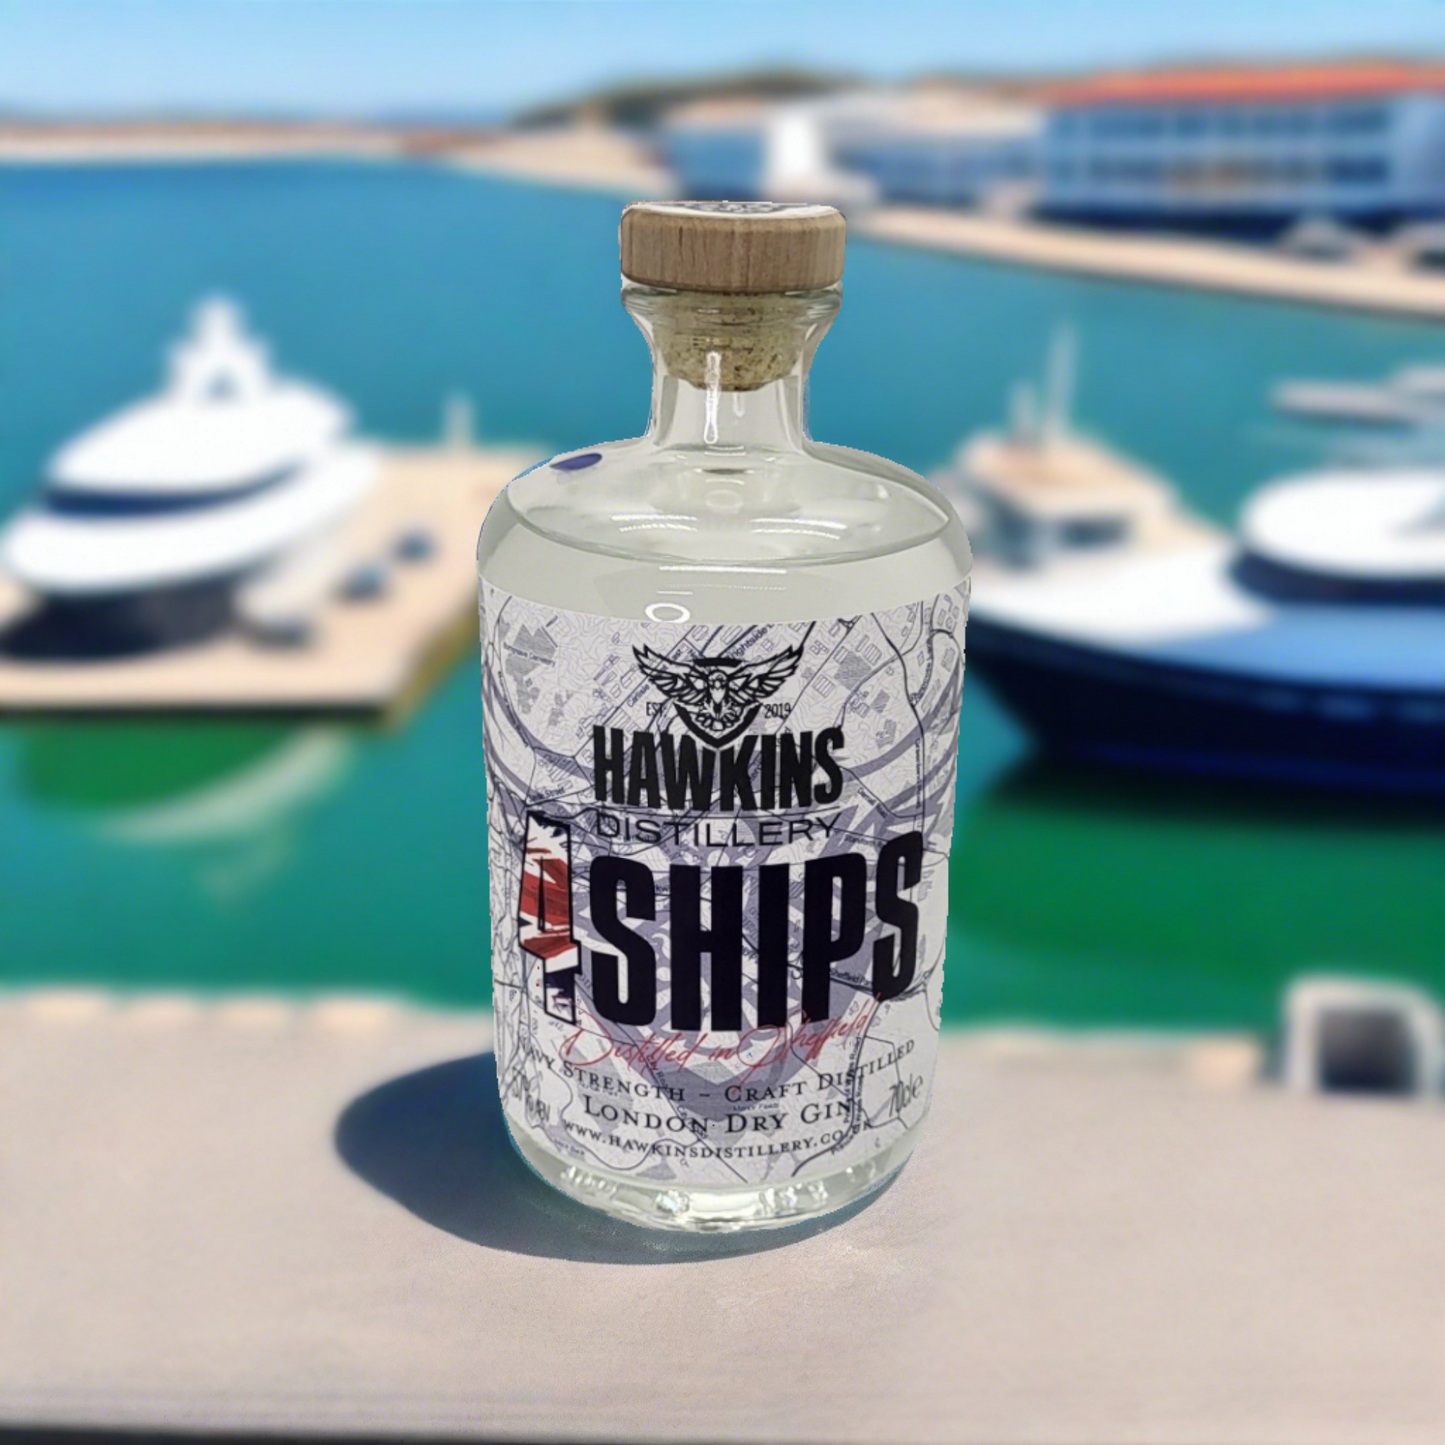 4Ships - Navy Strength Gin